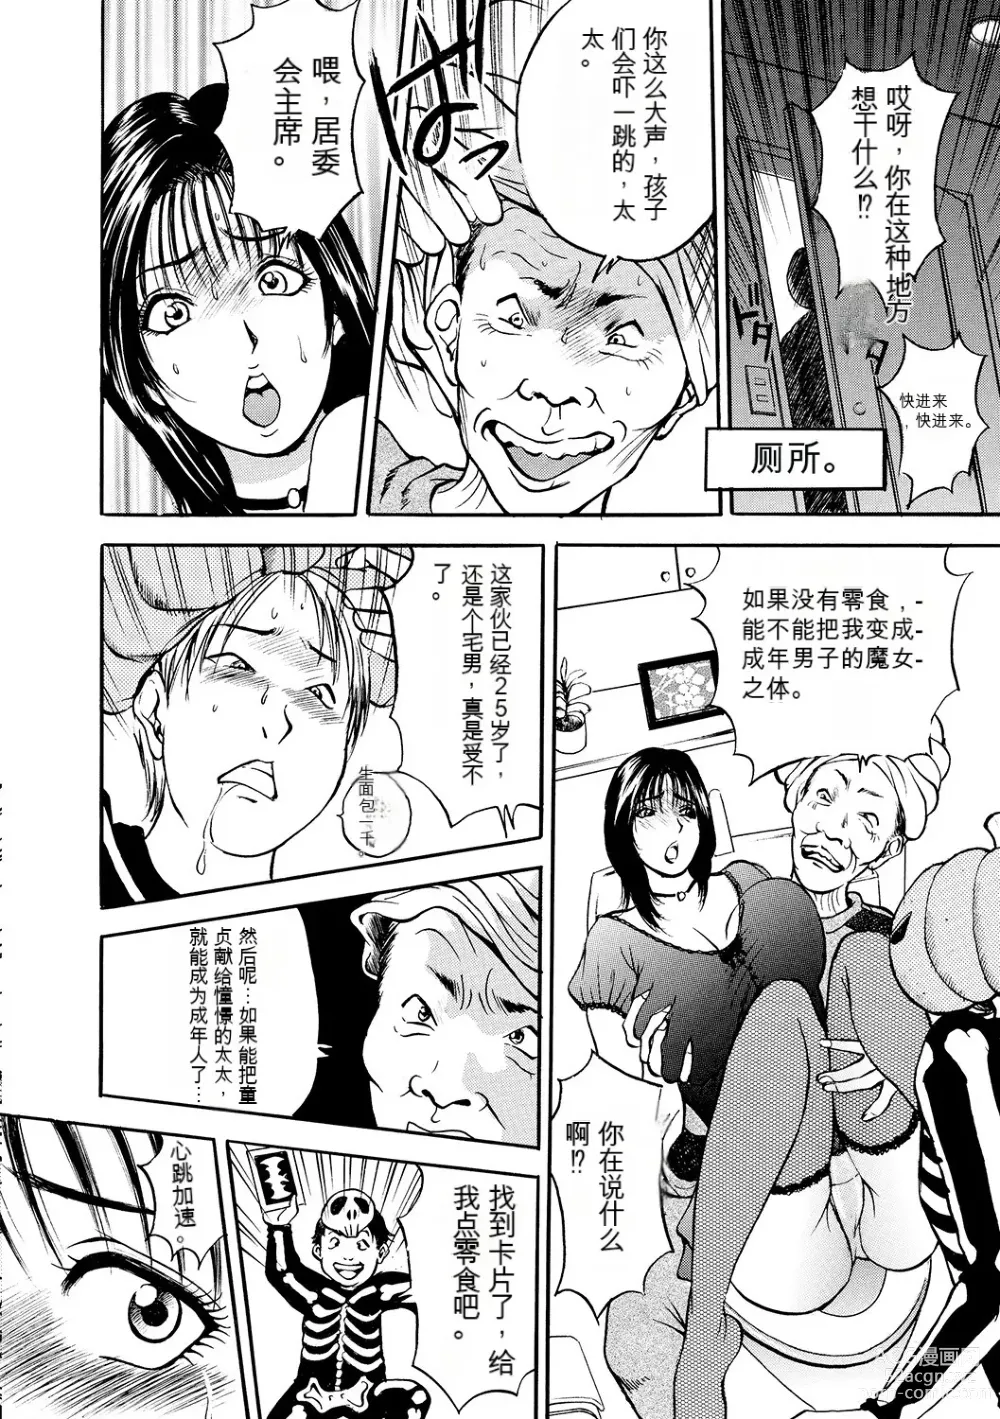 Page 196 of manga 母淫いぢり Boin Ijiri